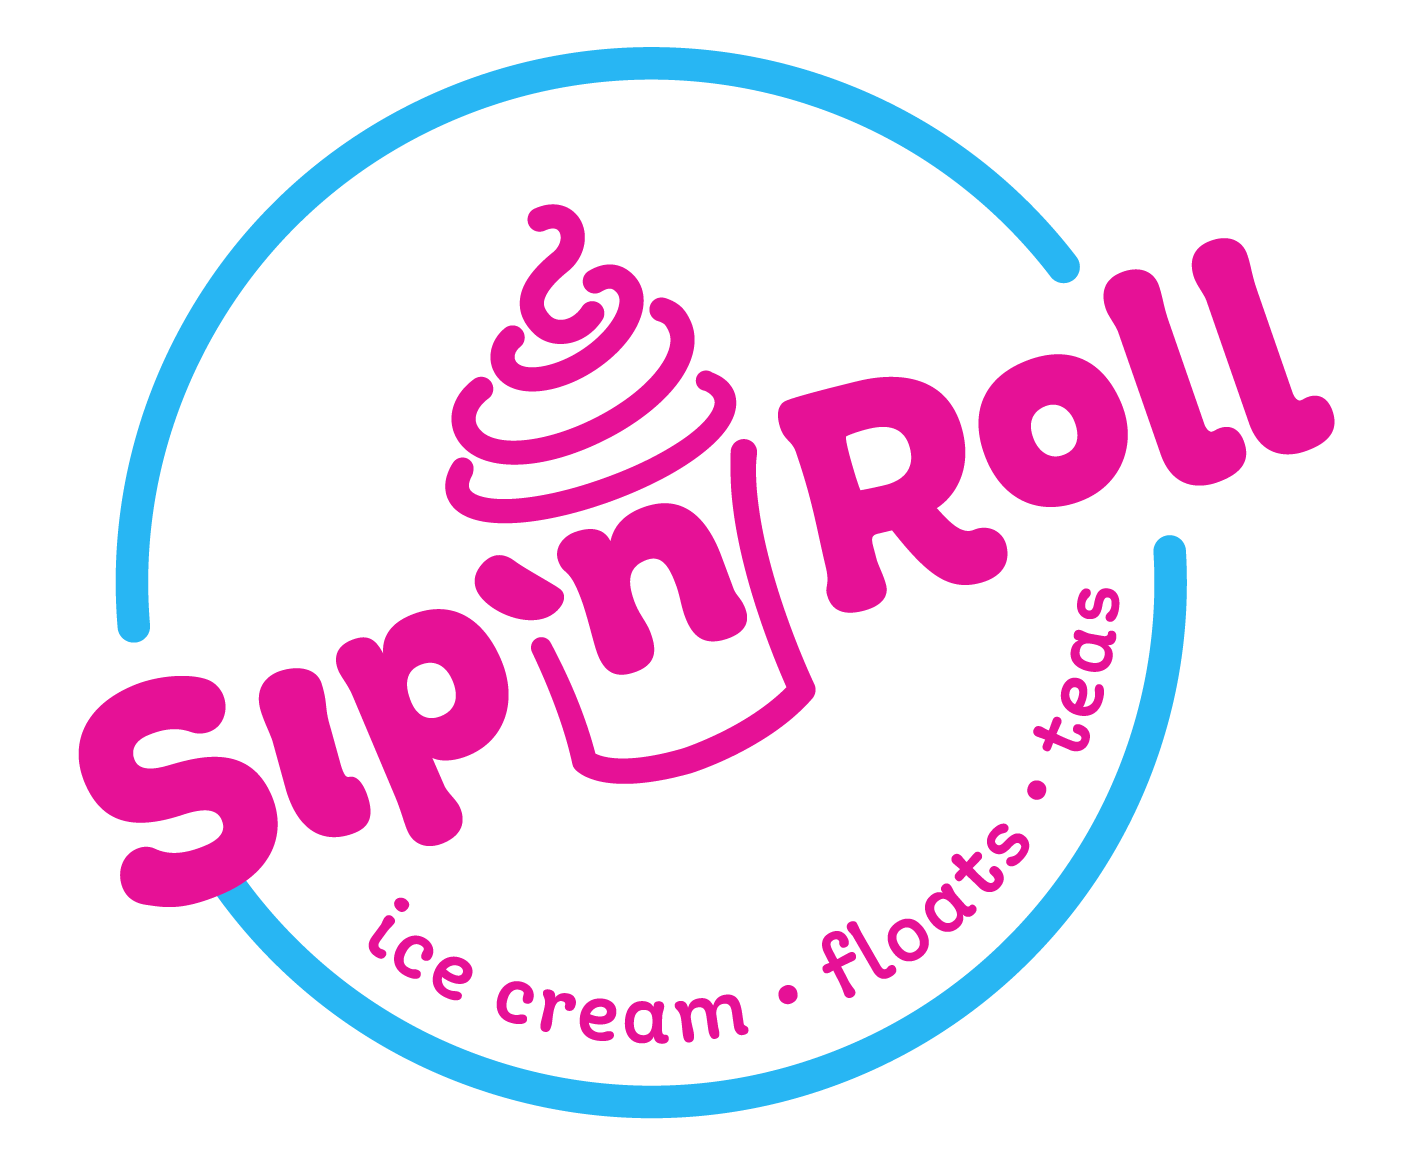 Rolled Ice Cream Orlando